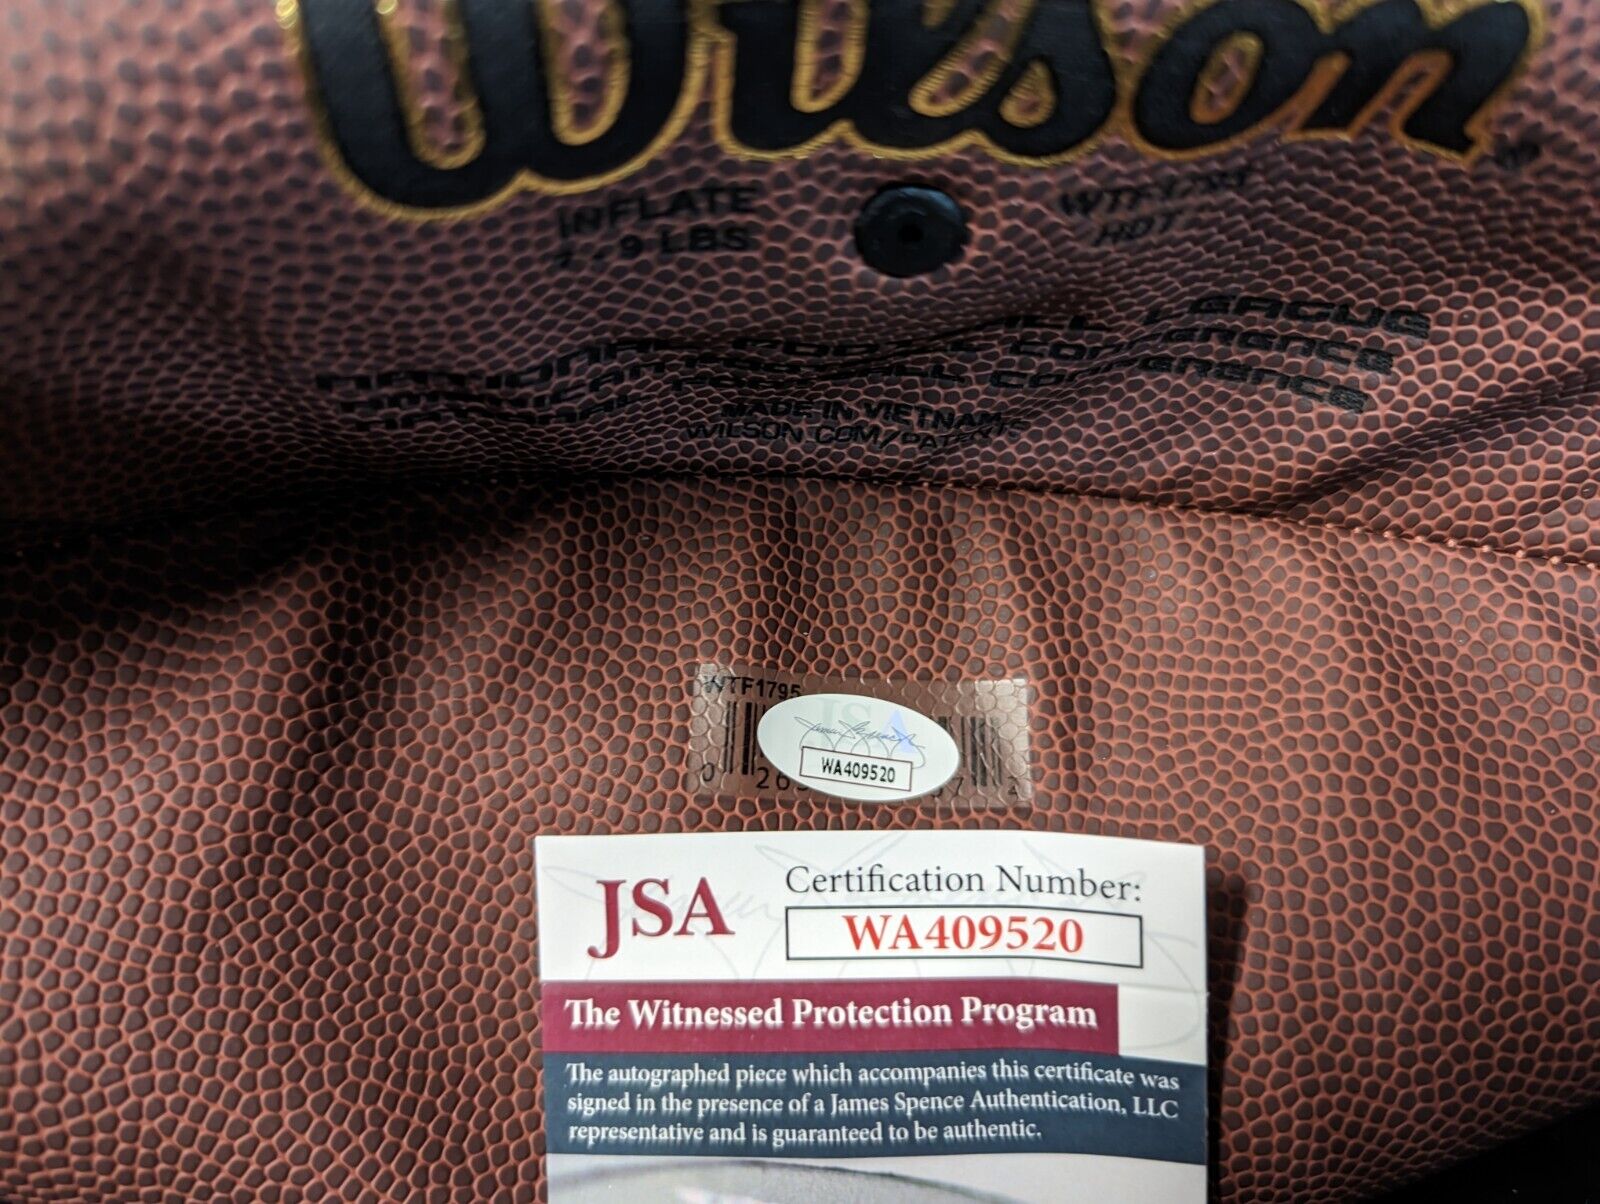 MVP Authentics Denver Broncos Caden Sterns Autographed Signed Nfl Football Jsa Coa 112.50 sports jersey framing , jersey framing